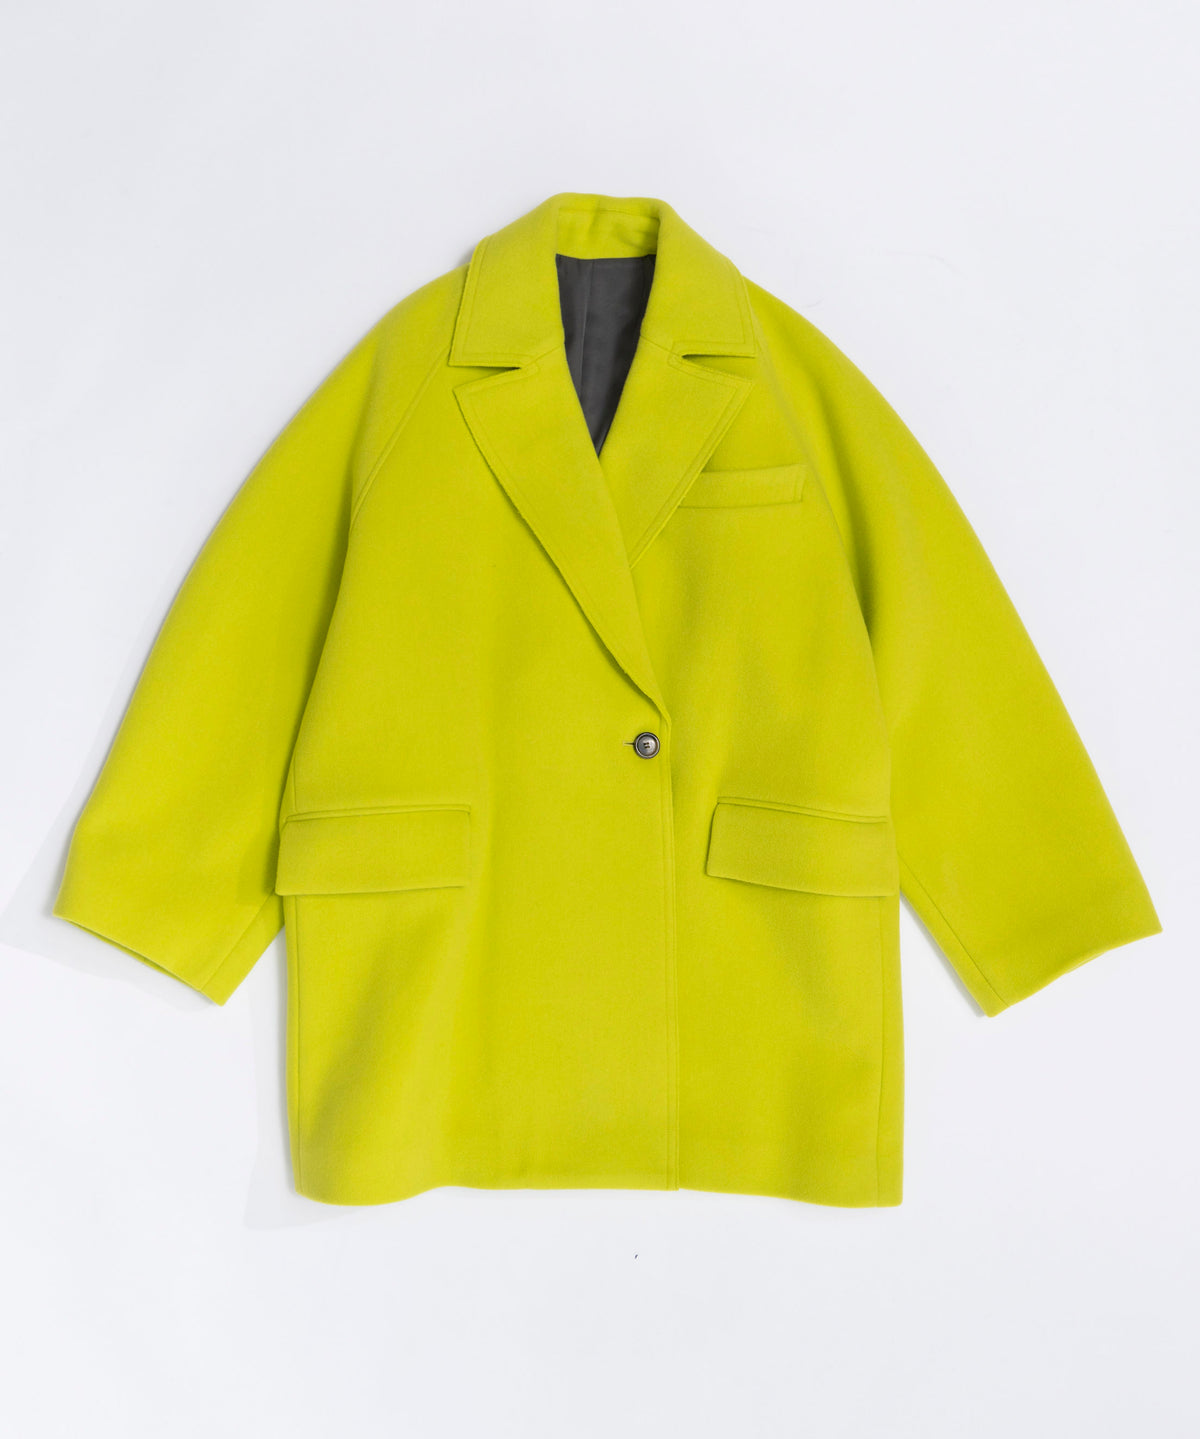 【SALE】Super140 Loose Jacket Coat